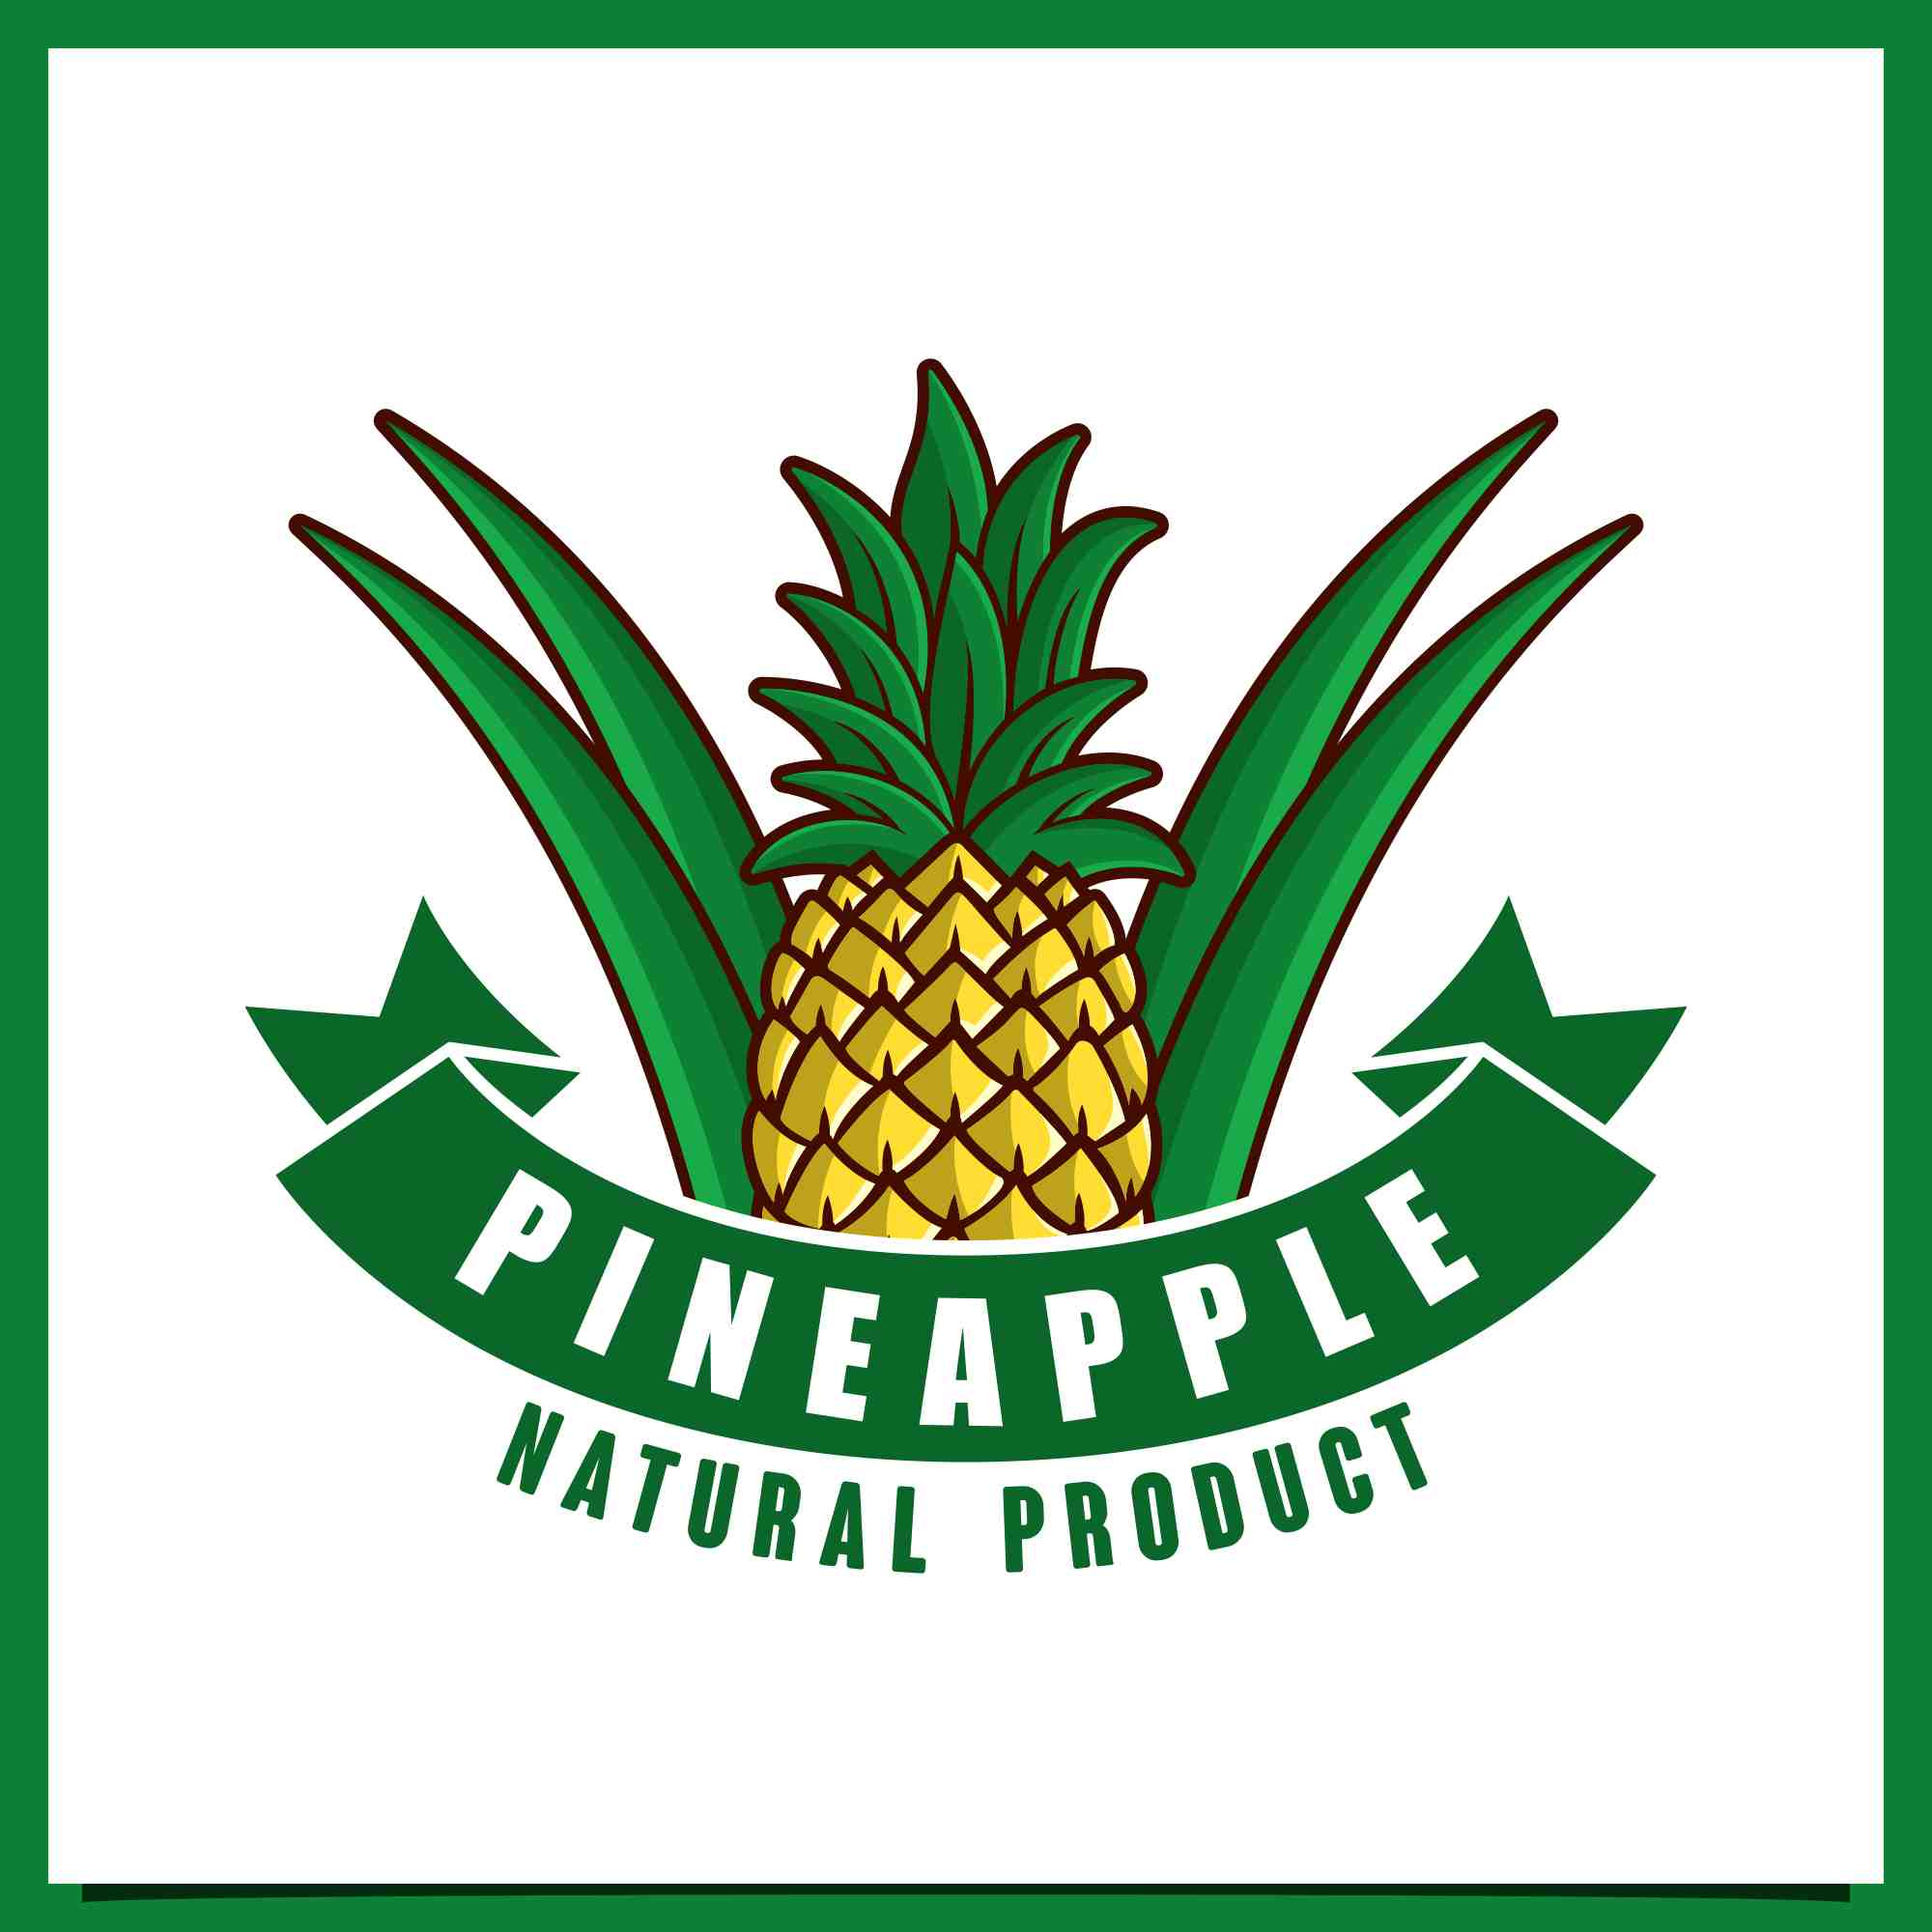 pineapple badge logo design collection 3 278